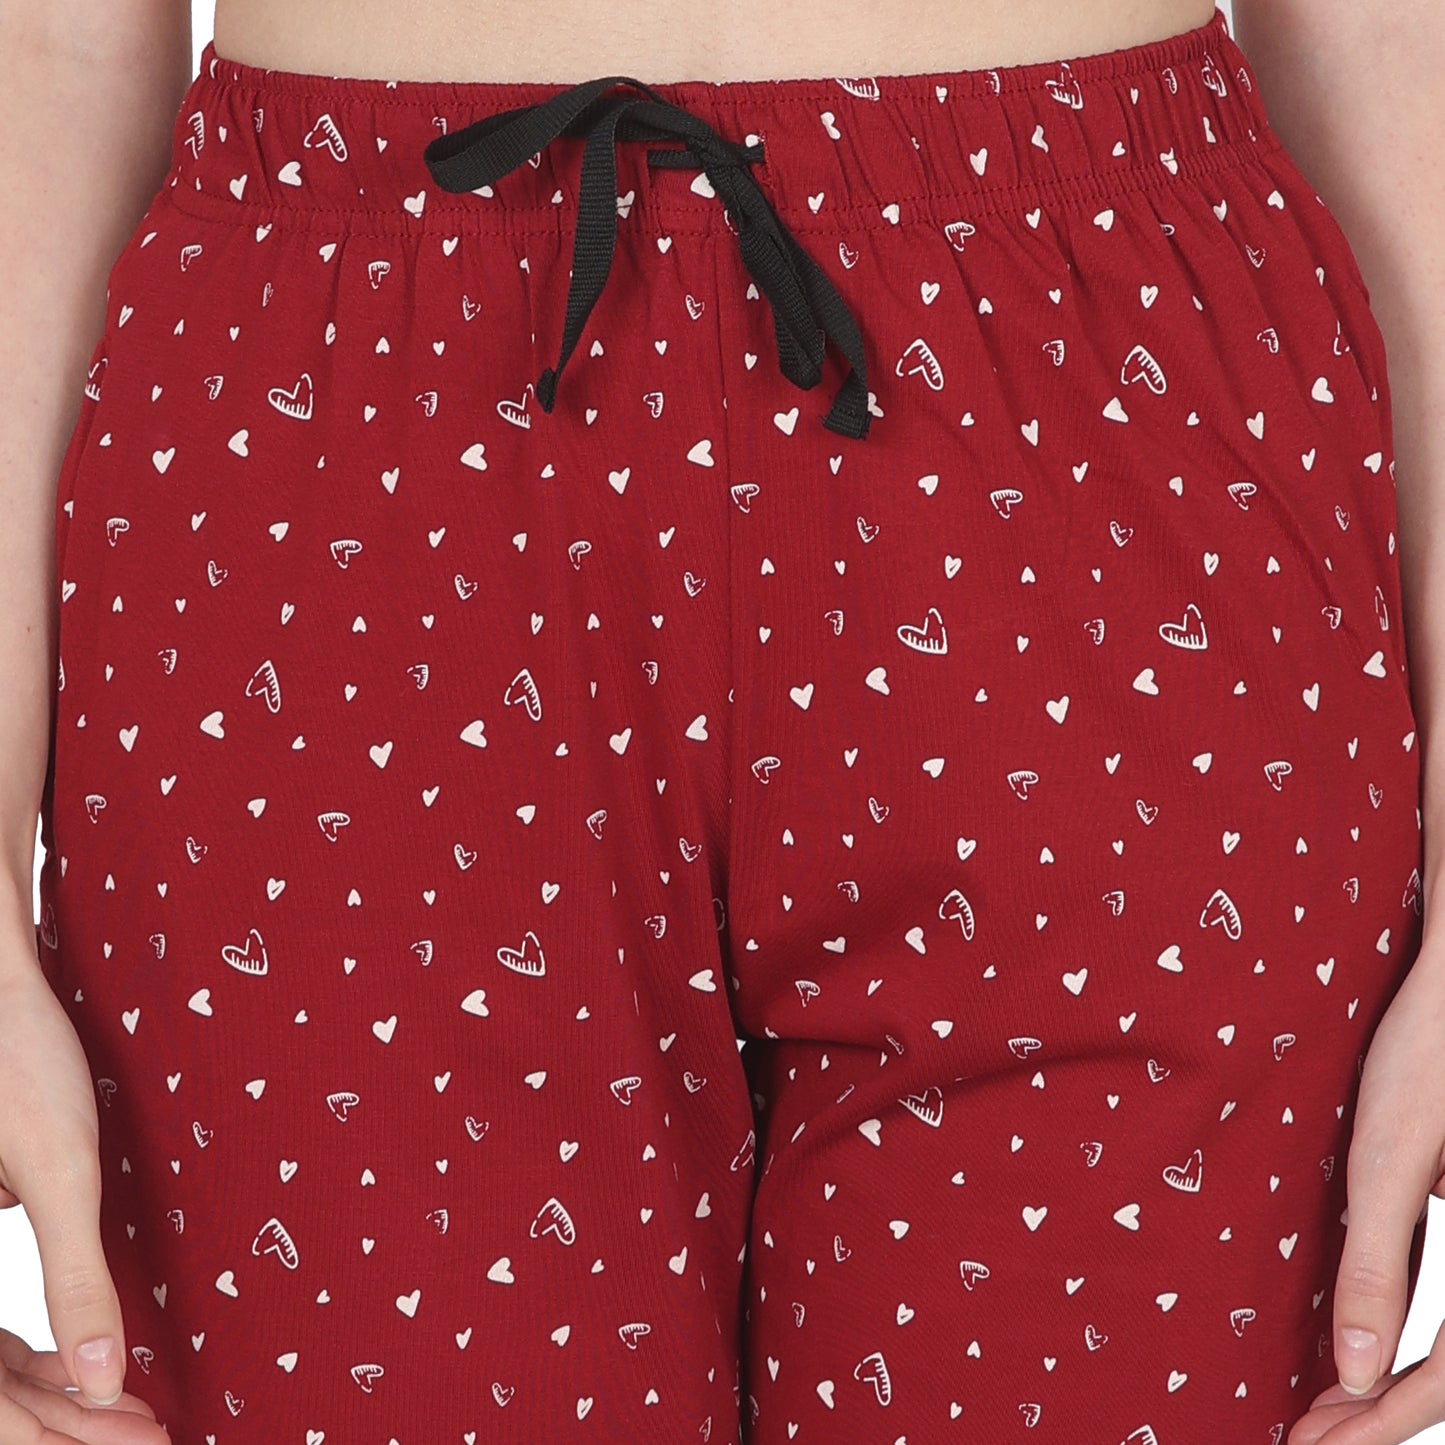 Eazy Women's Printed Capri Pants- Pack of 4 - Blush, Cherry Red ,Navy Blue & Steel Blue